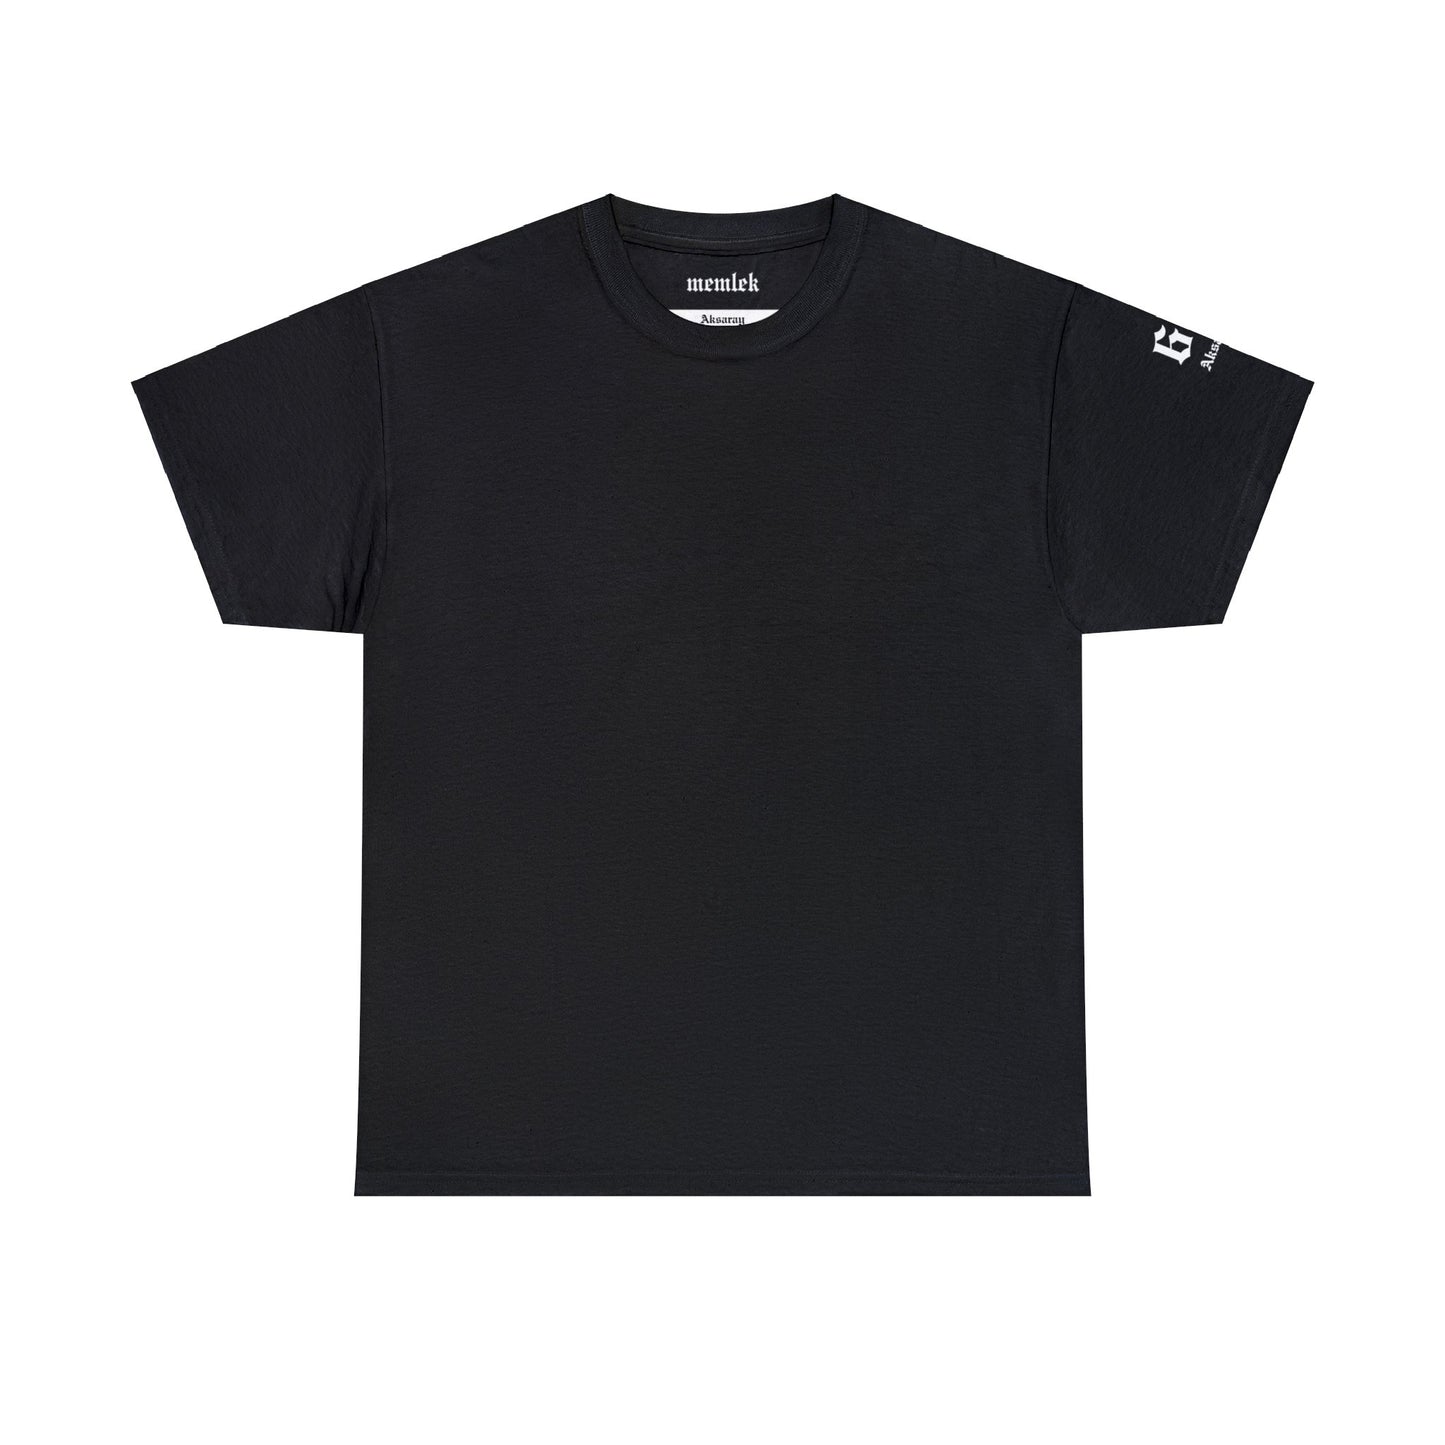 İlçem - 68 Aksaray - T-Shirt - Back Print - Black